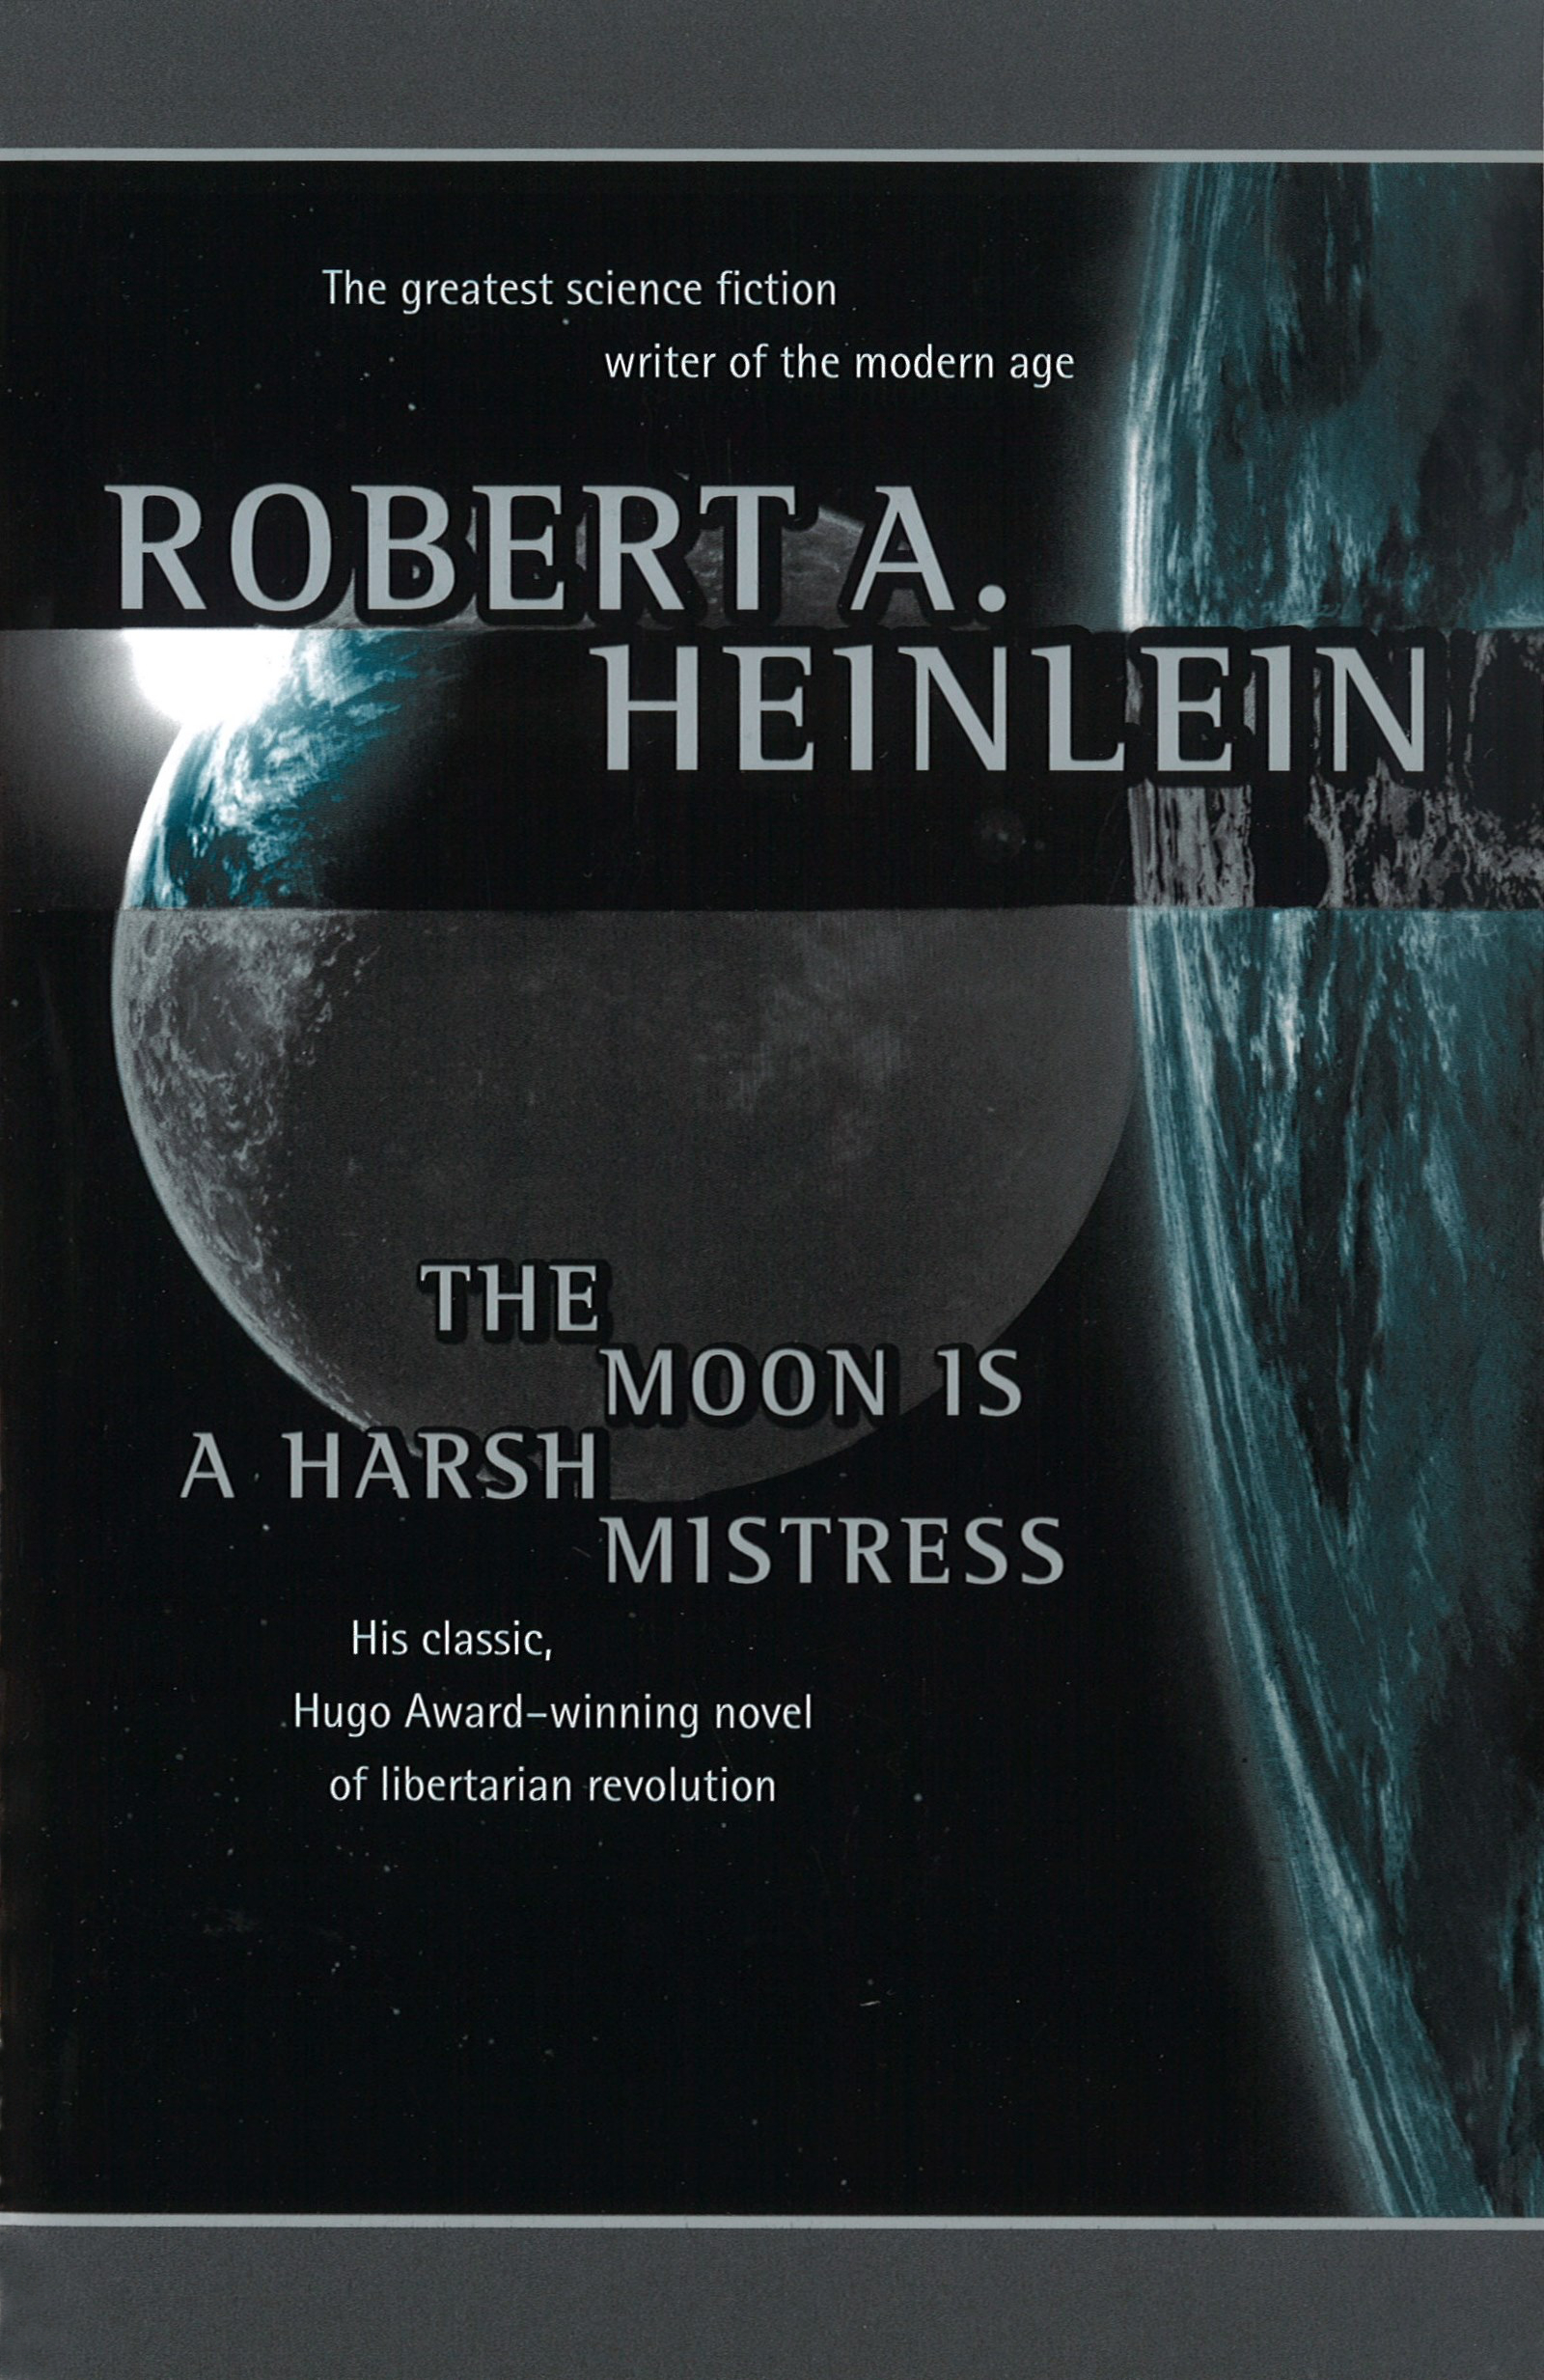 The Moon is a Harsh Mistress By Robert A. Heinlein